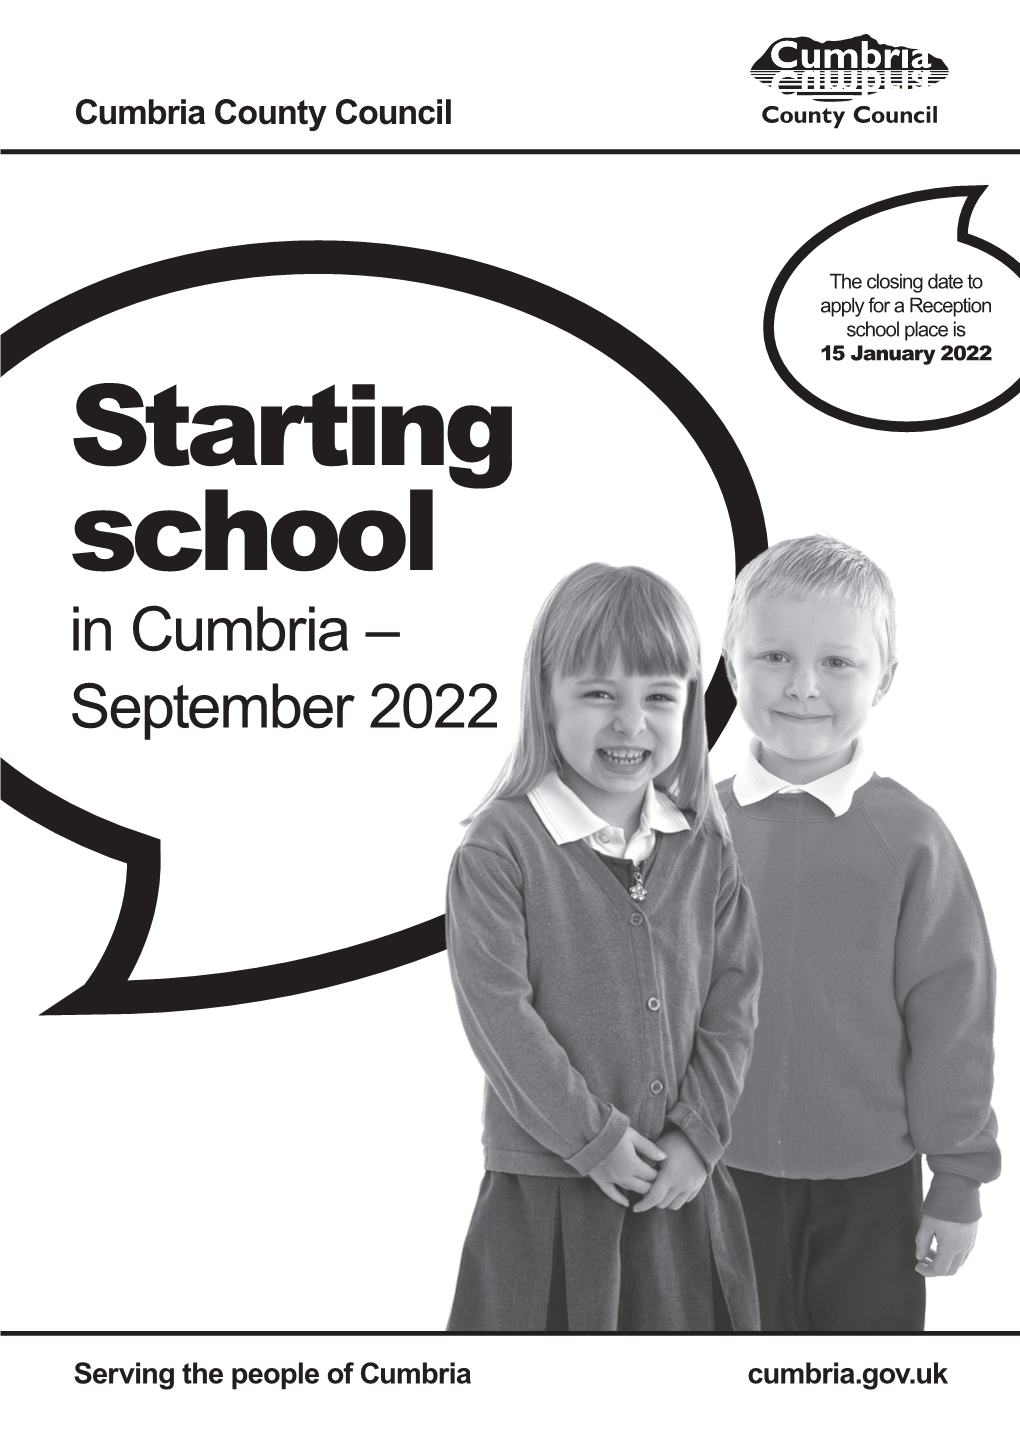 Starting School in Cumbria 2021